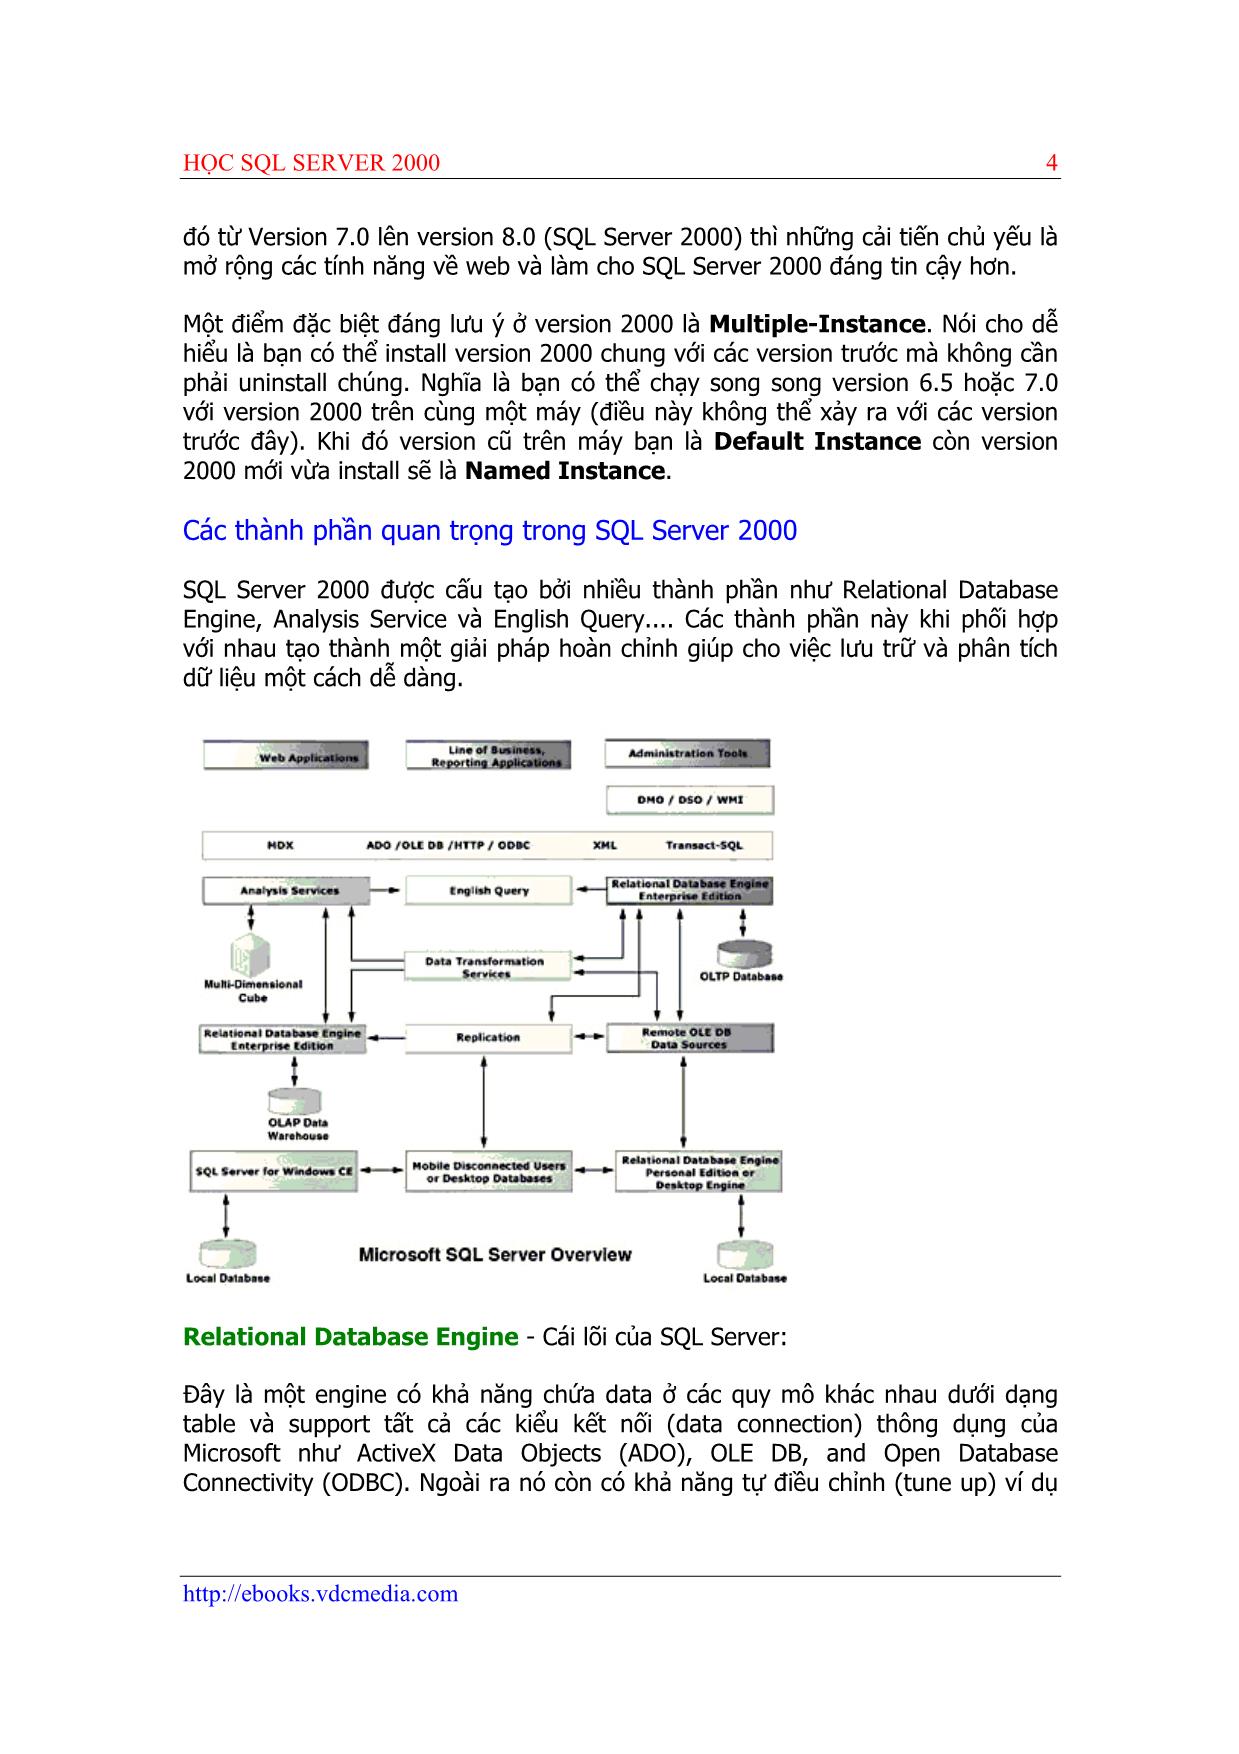 Học SQL Server 2000 trang 4